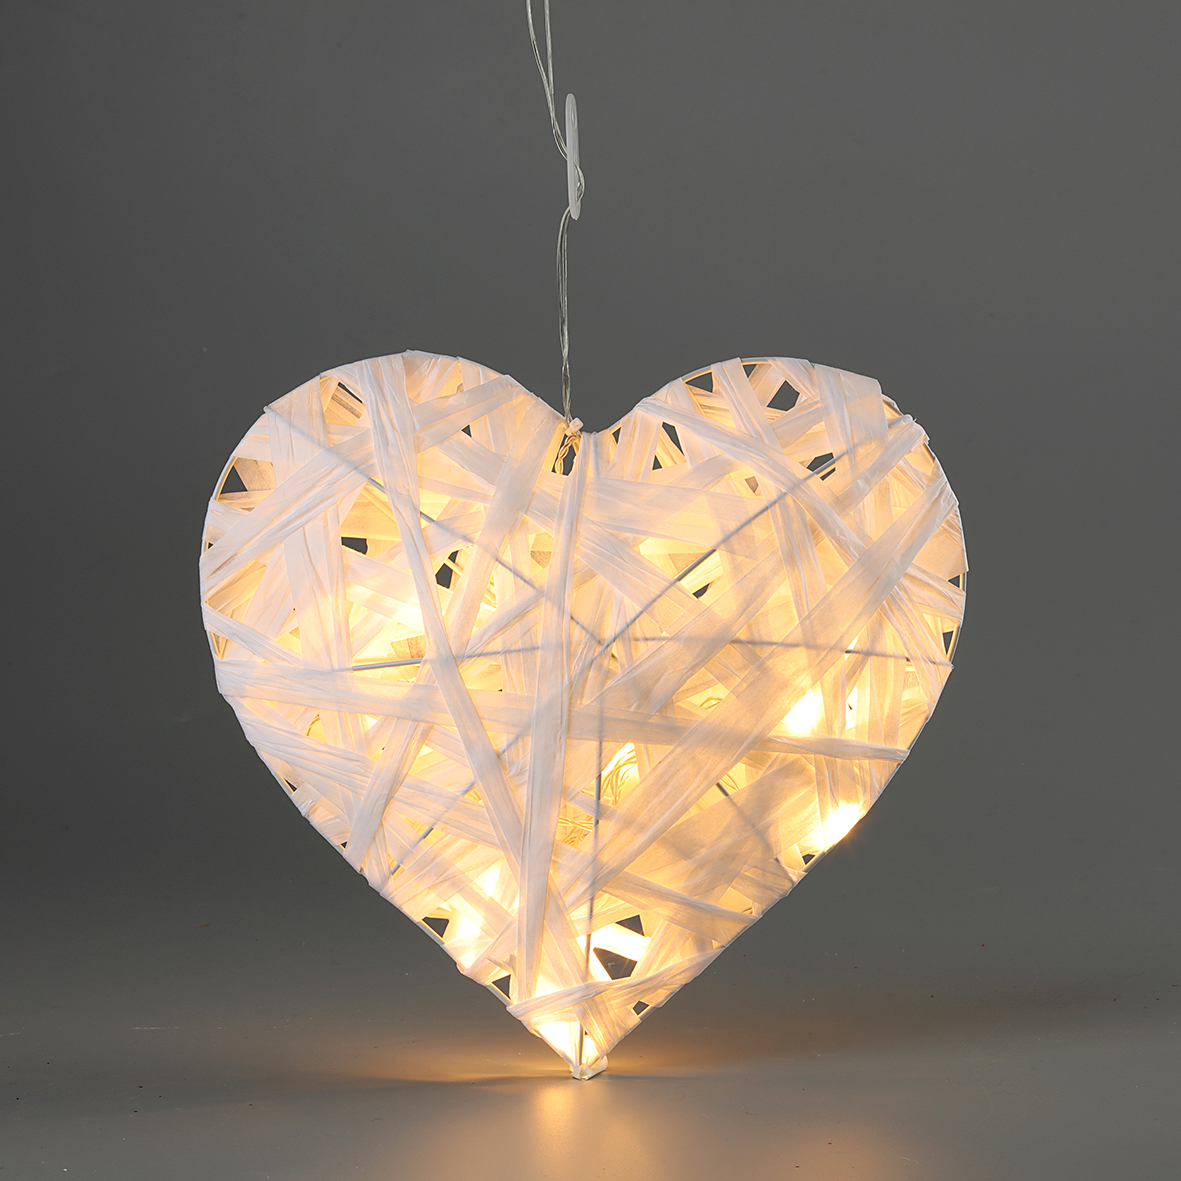 Paper Material Heart, 6 Led Lights